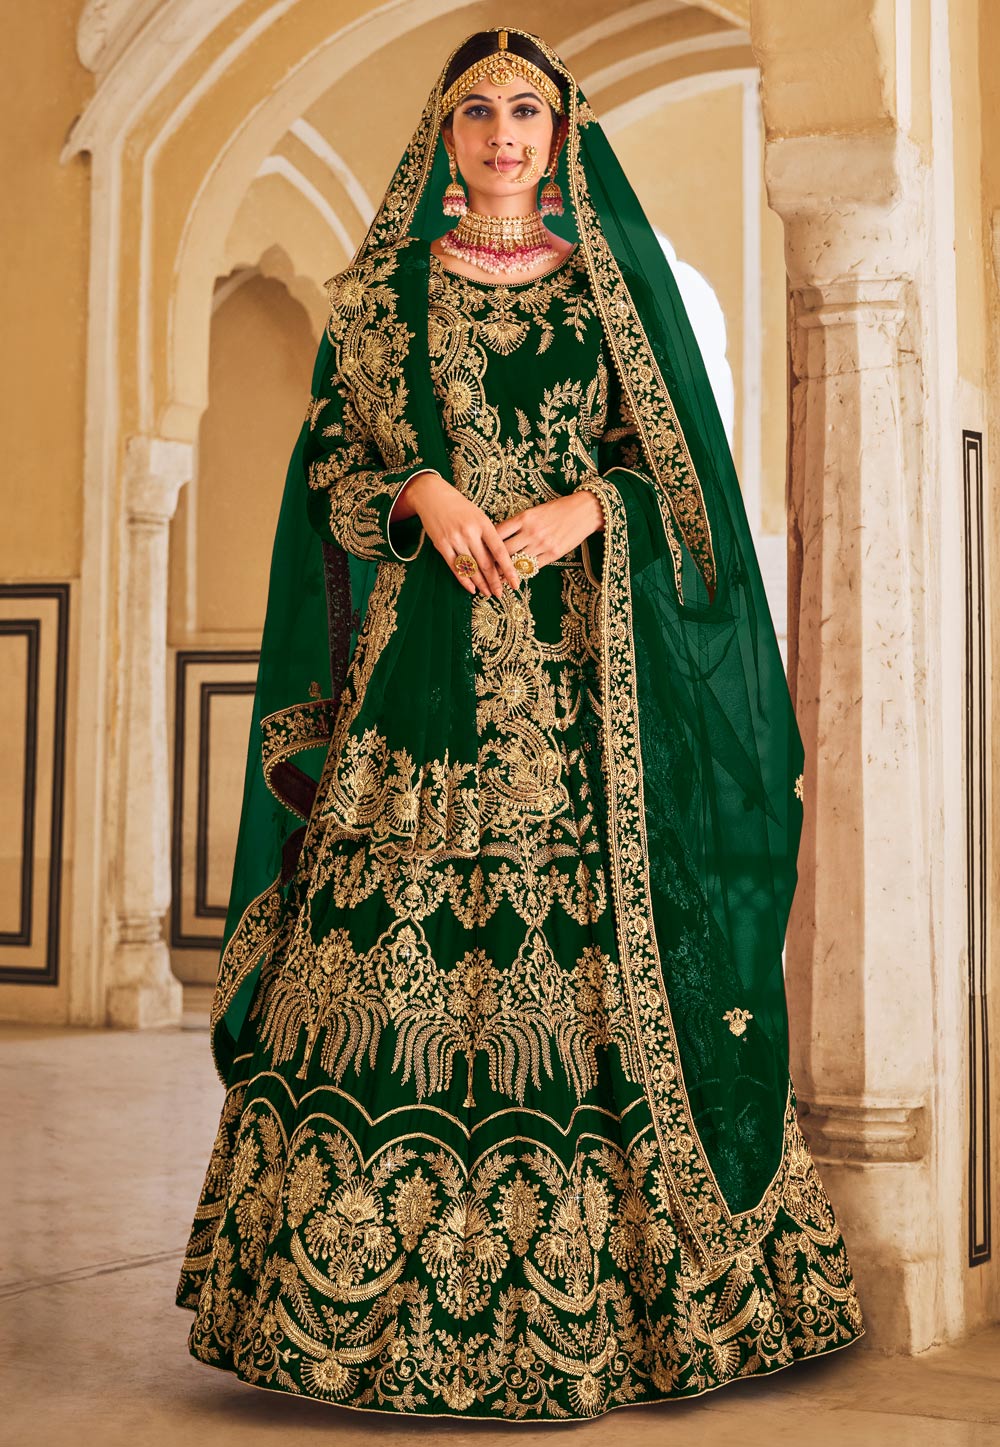 Kiara Advani White Designer Lehenga Choli, With Canvas & Can-can, Bollywood  Celebrity Style Wedding, Bridal Readymade Heavy Outfit Dress - Etsy